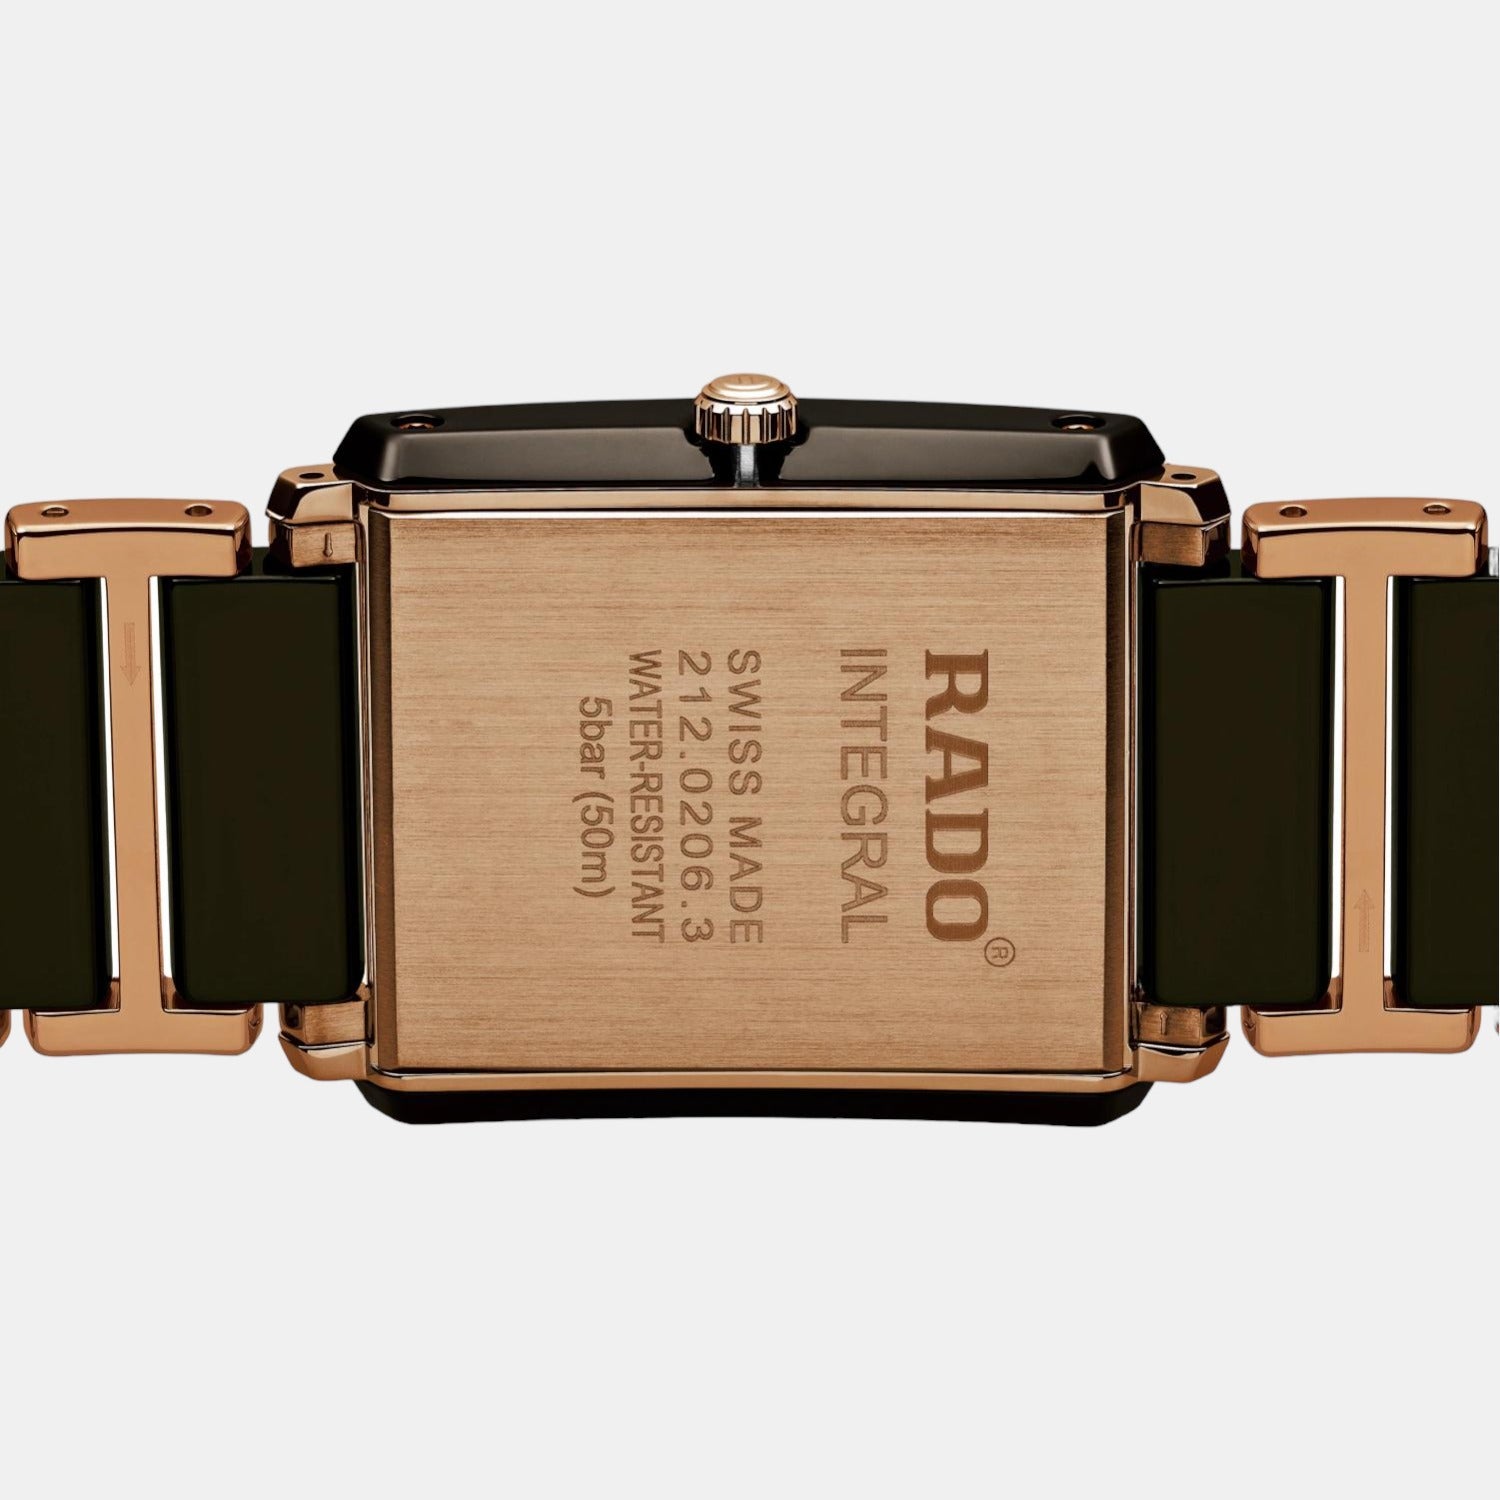 rado-ceramic-black-analog-unisex-watch-r20219712